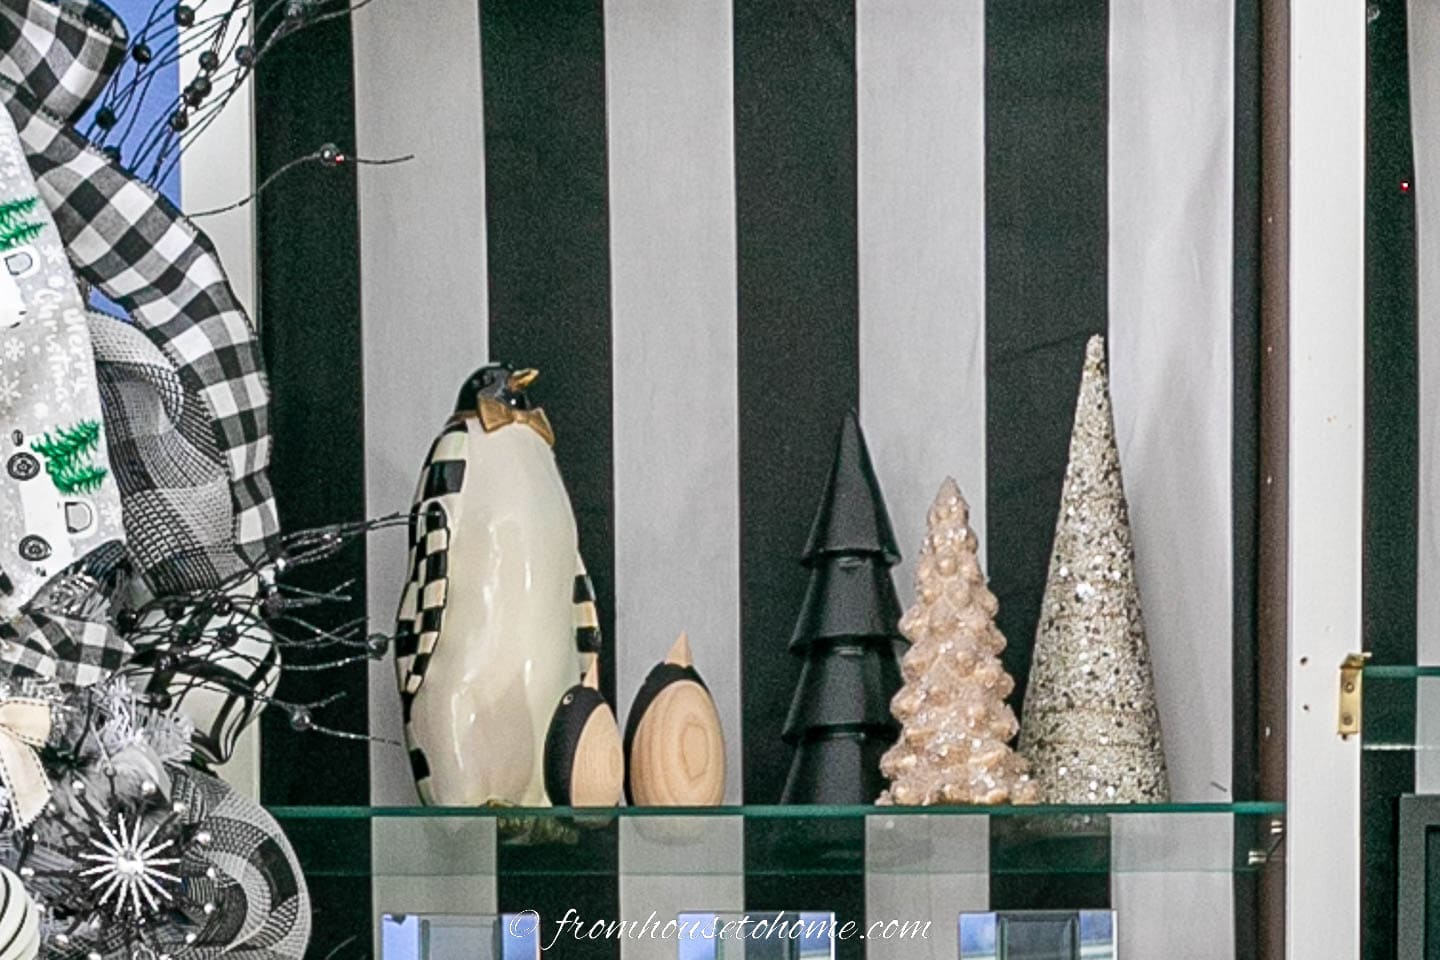 A set of penguins and black and white mini evergreen trees on a bookshelf